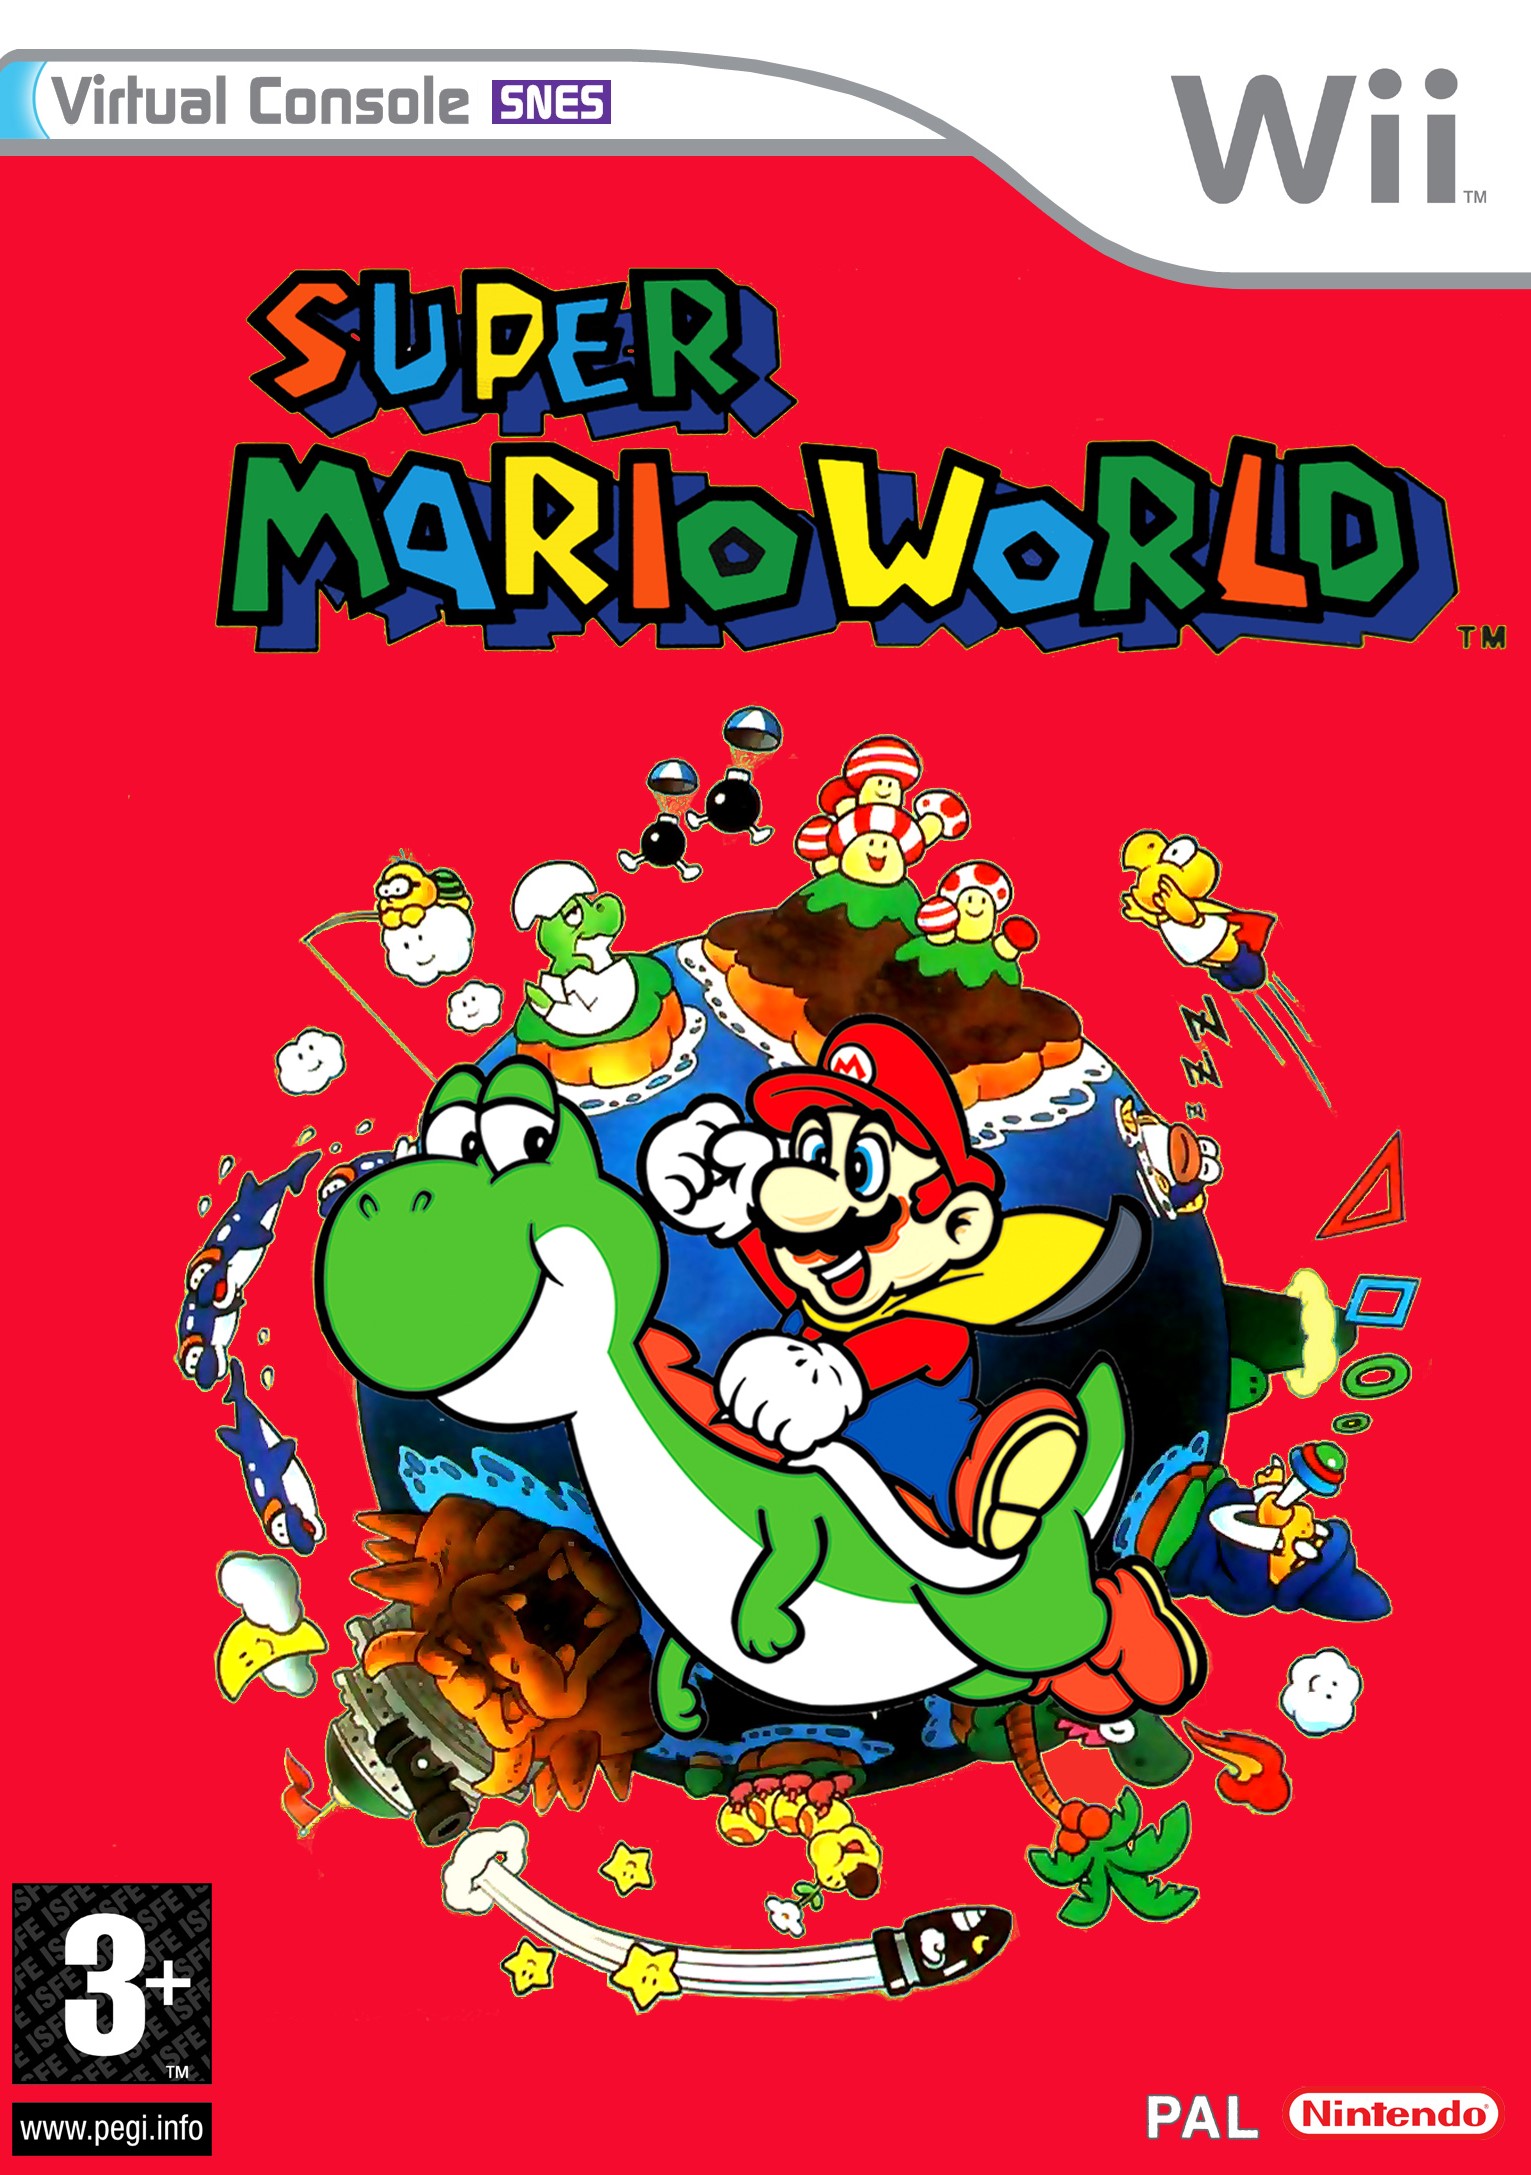 'Super Mario World'